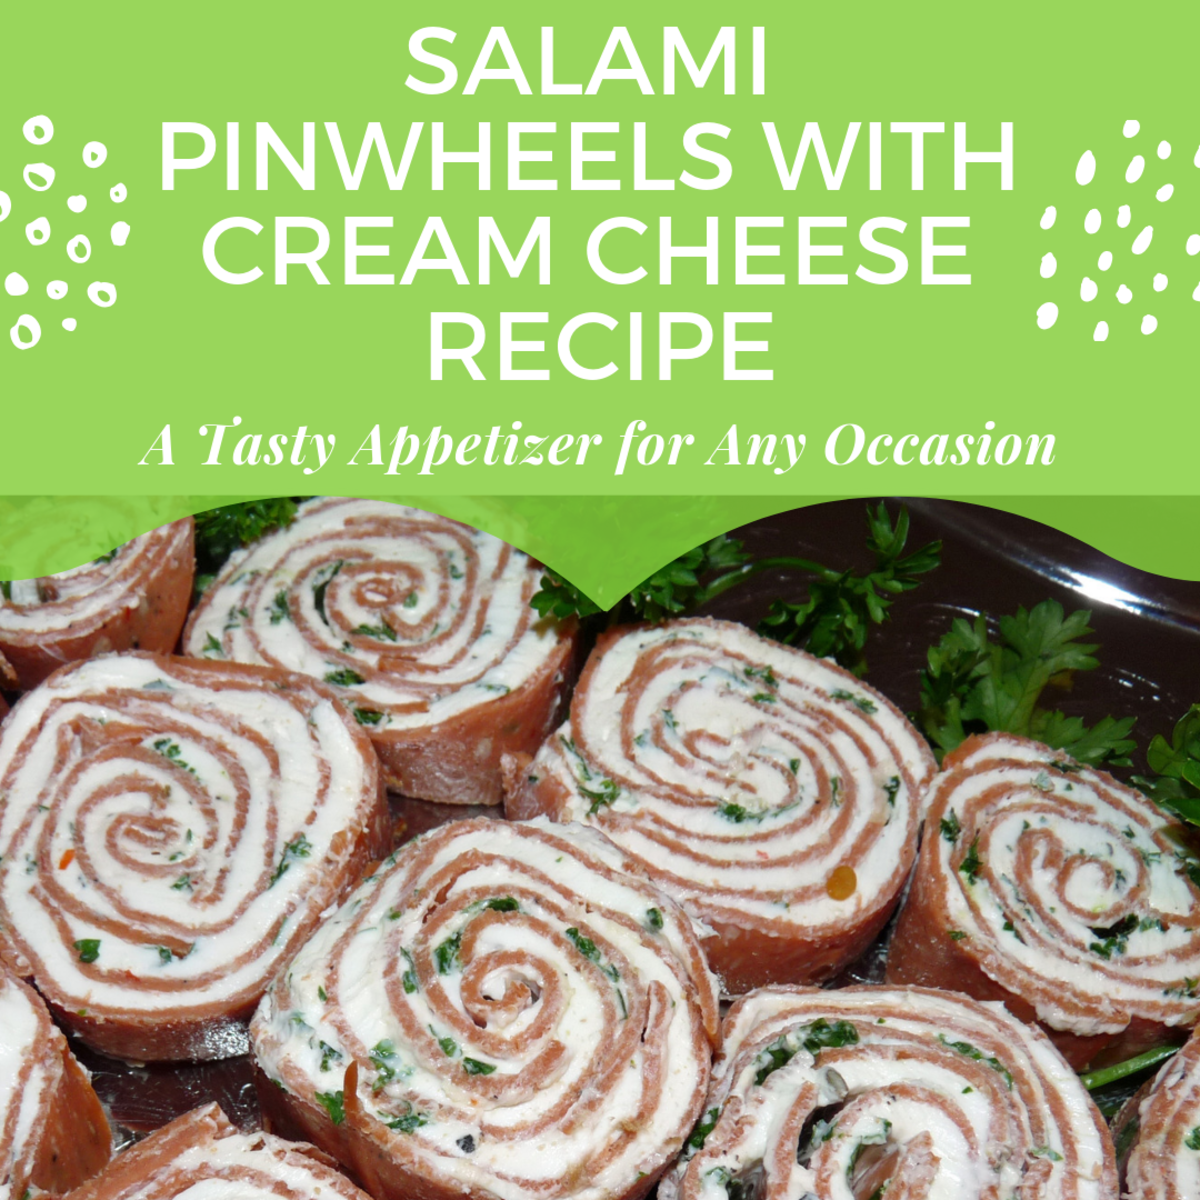 Salami Pinwheels with Cream Cheese Recipe